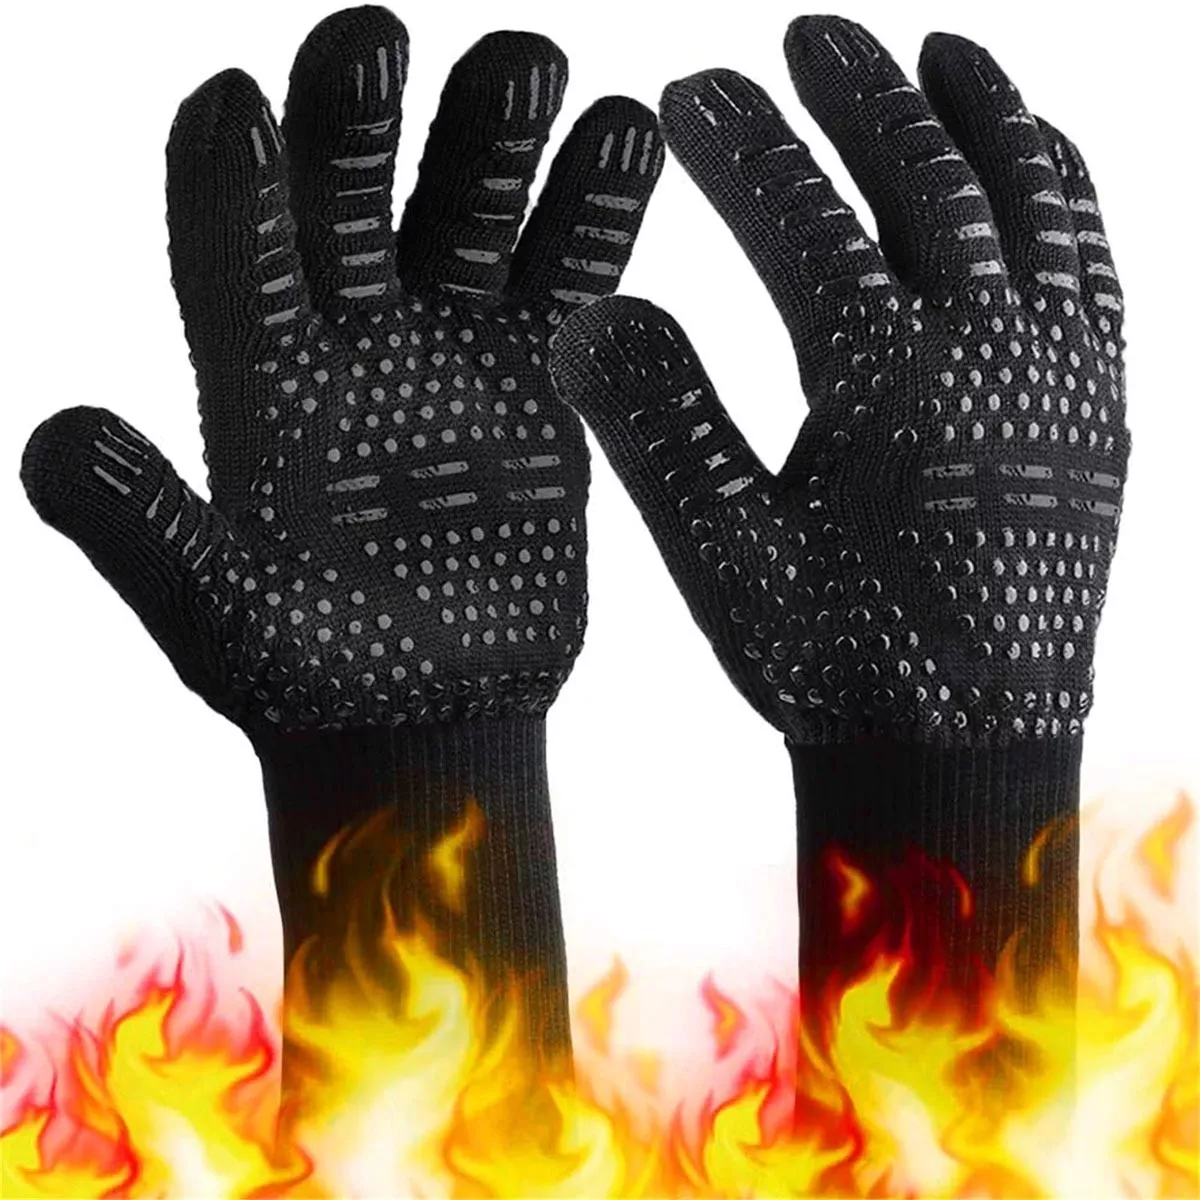 Tercera imagen para búsqueda de guantes para horno